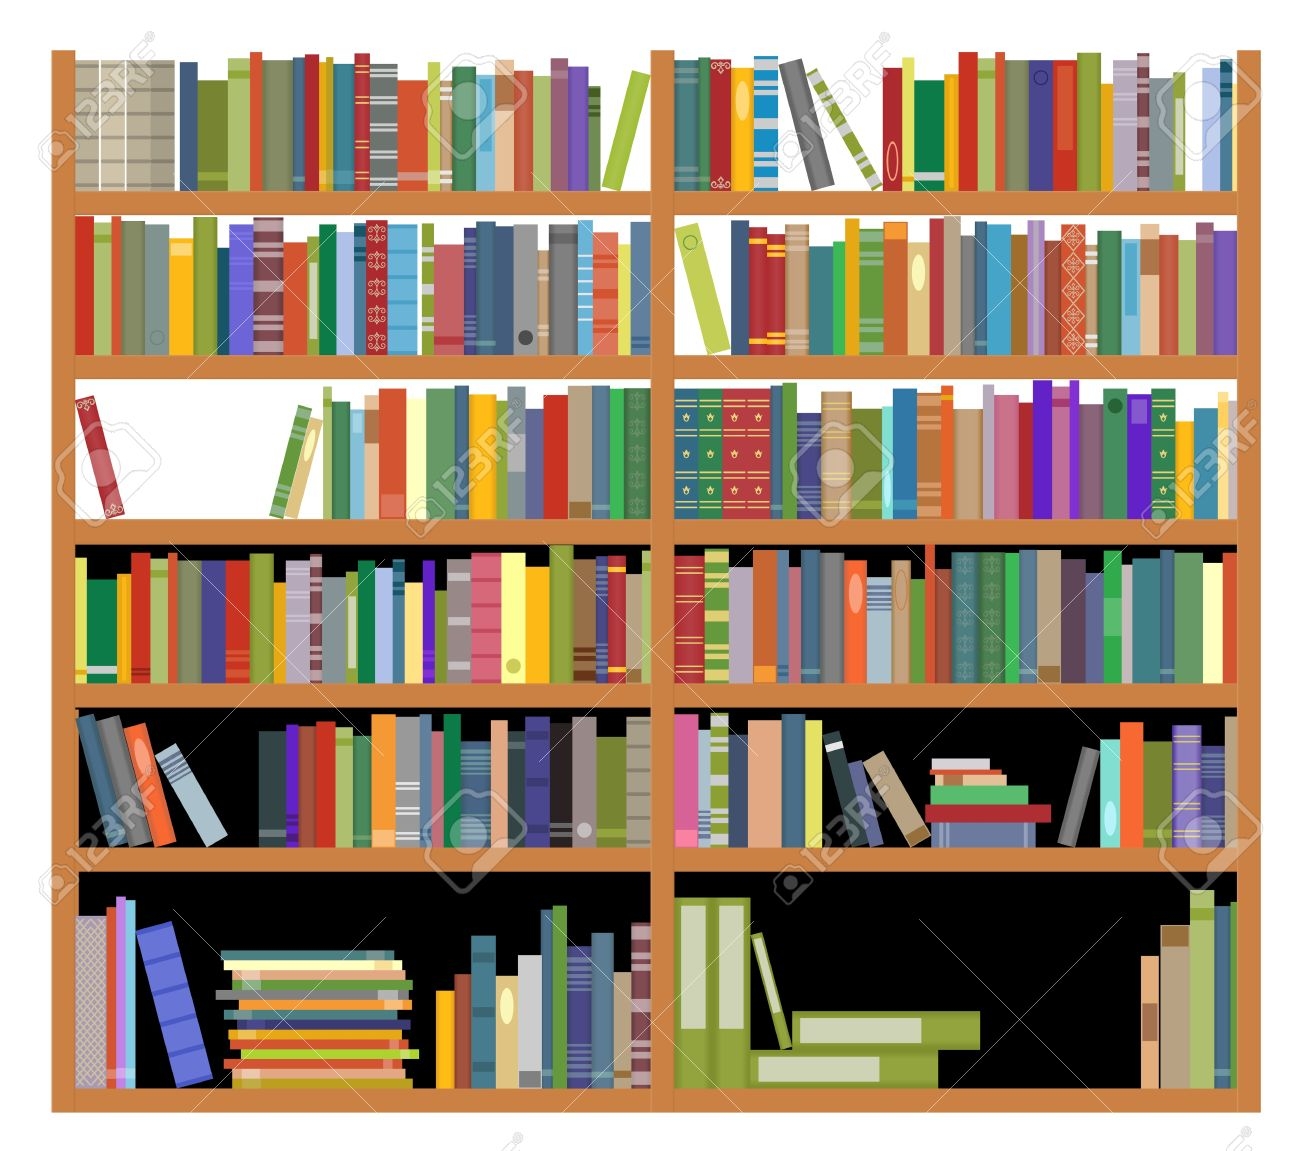 Bookshelf clipart bookshelve, Picture #114136 bookshelf clipart bookshelve